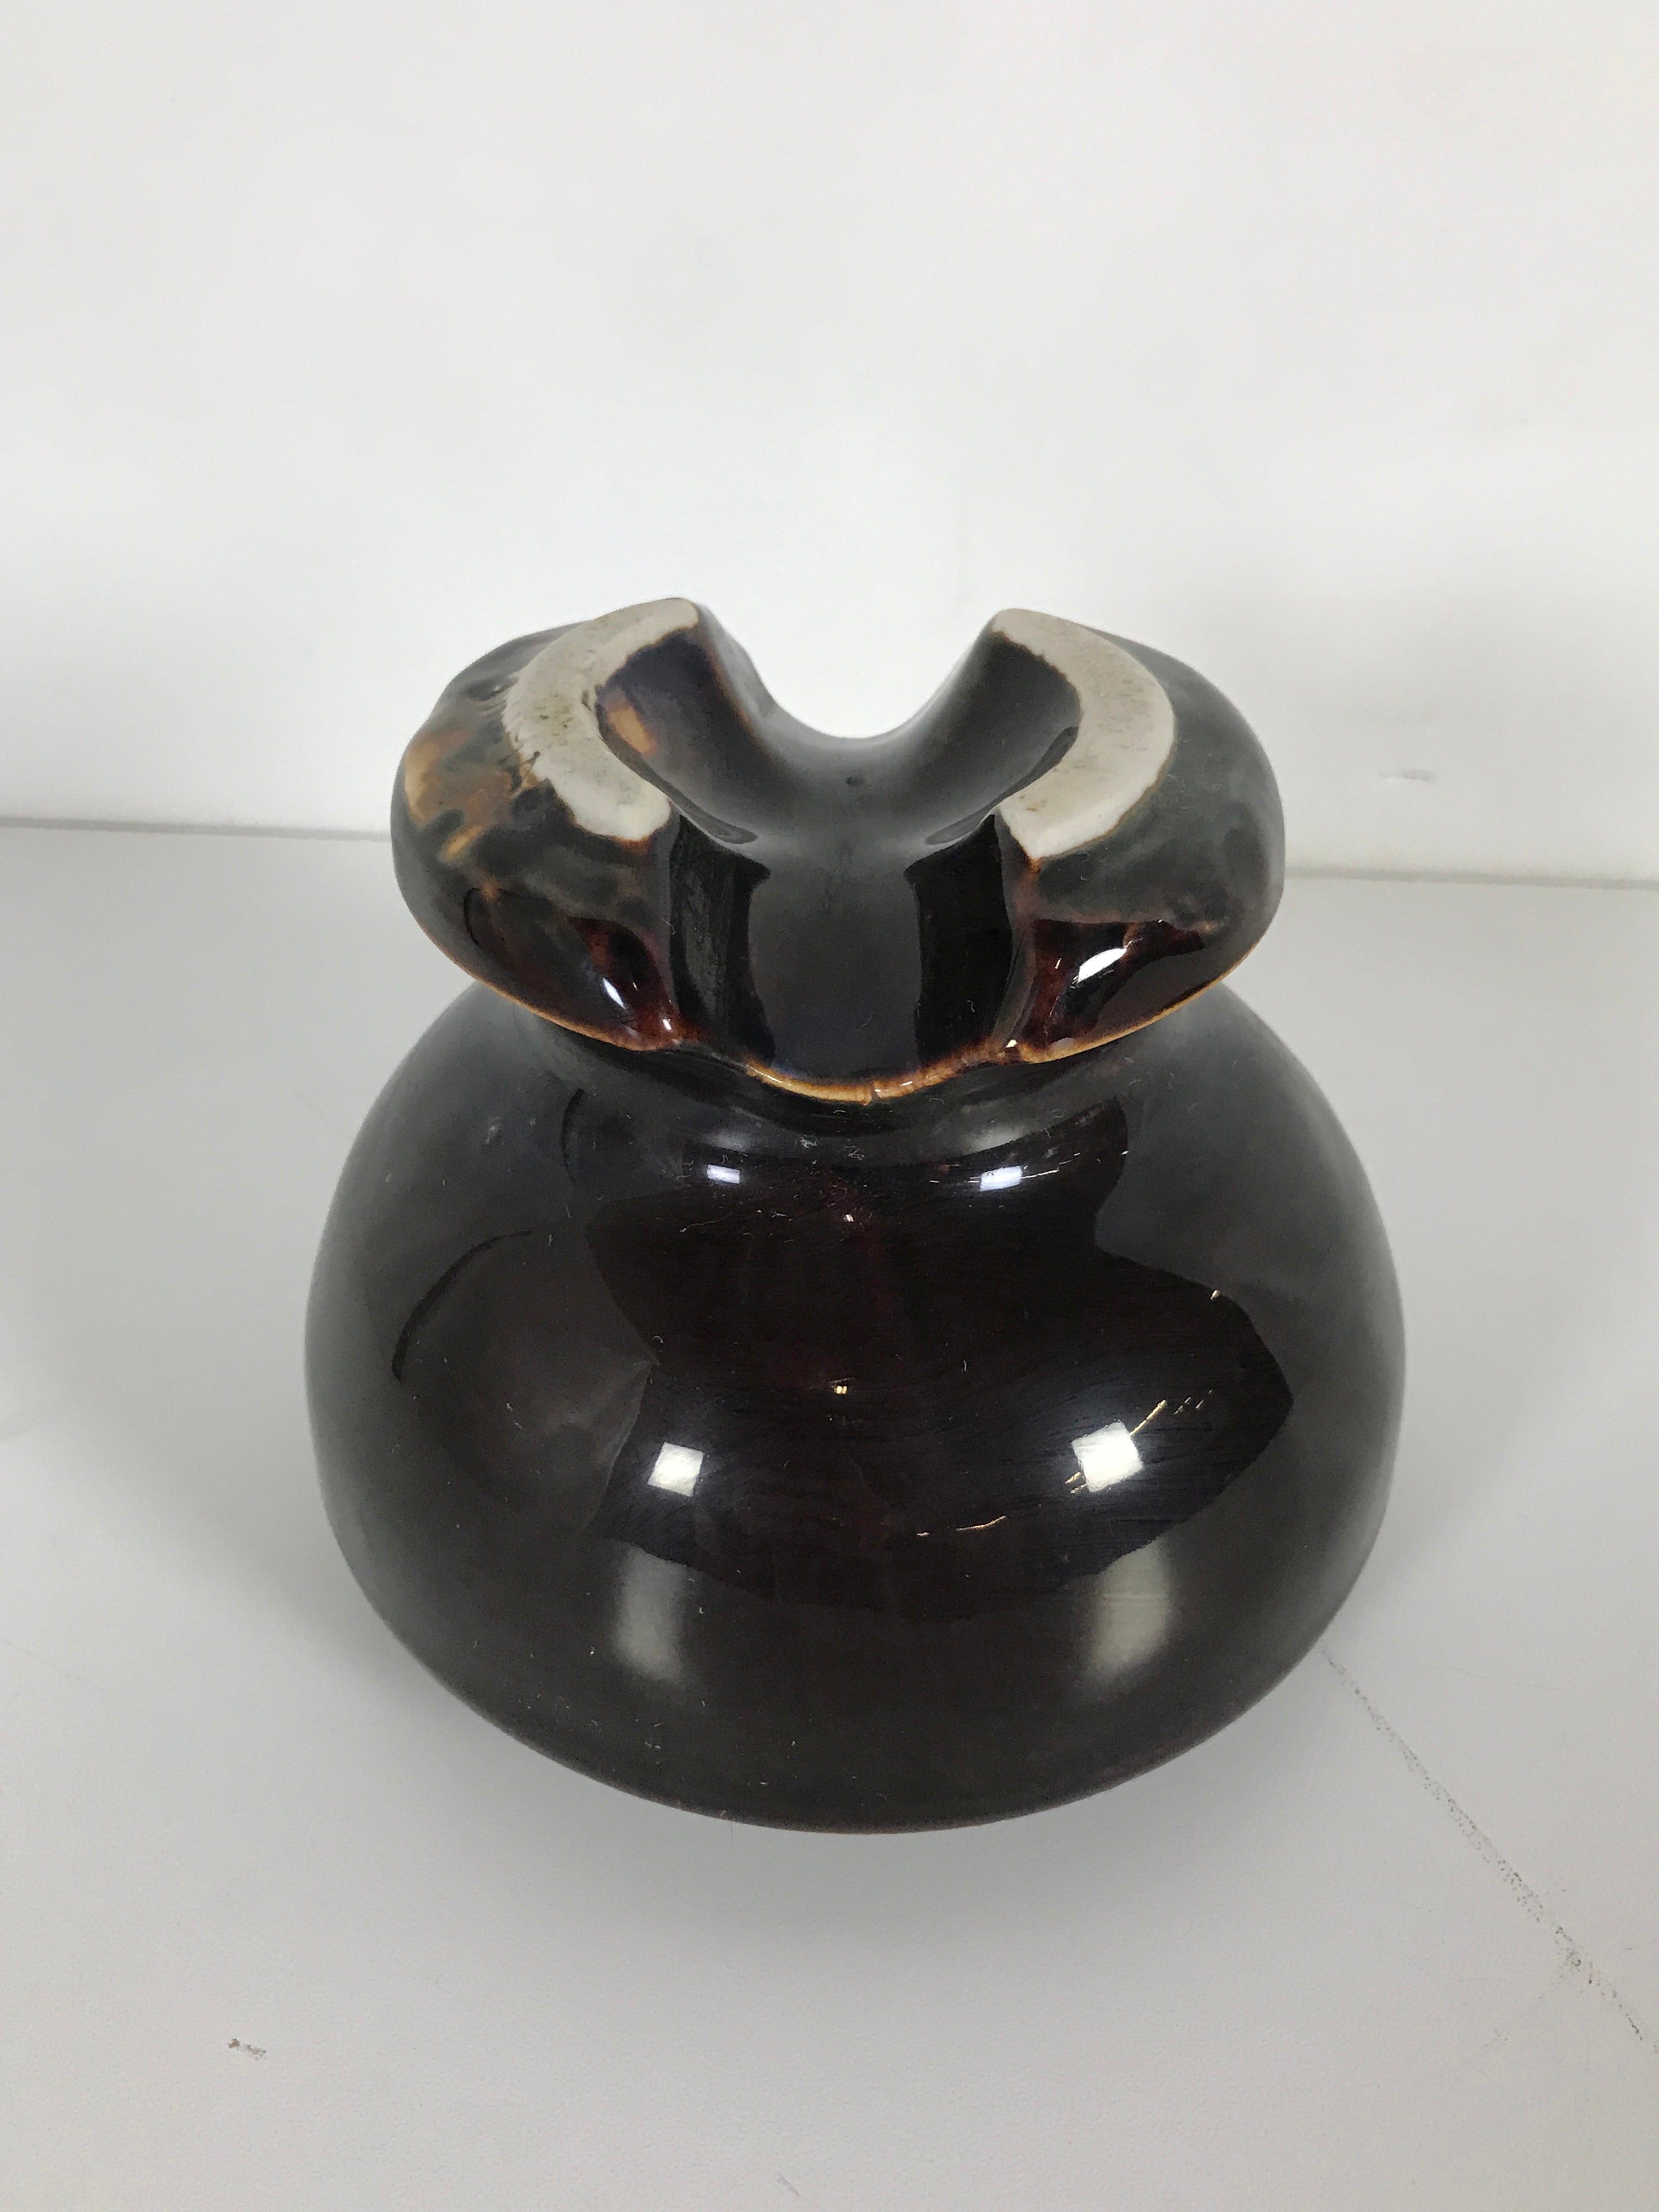 Antique Large Dark Brown Ceramic Insulator with White Top